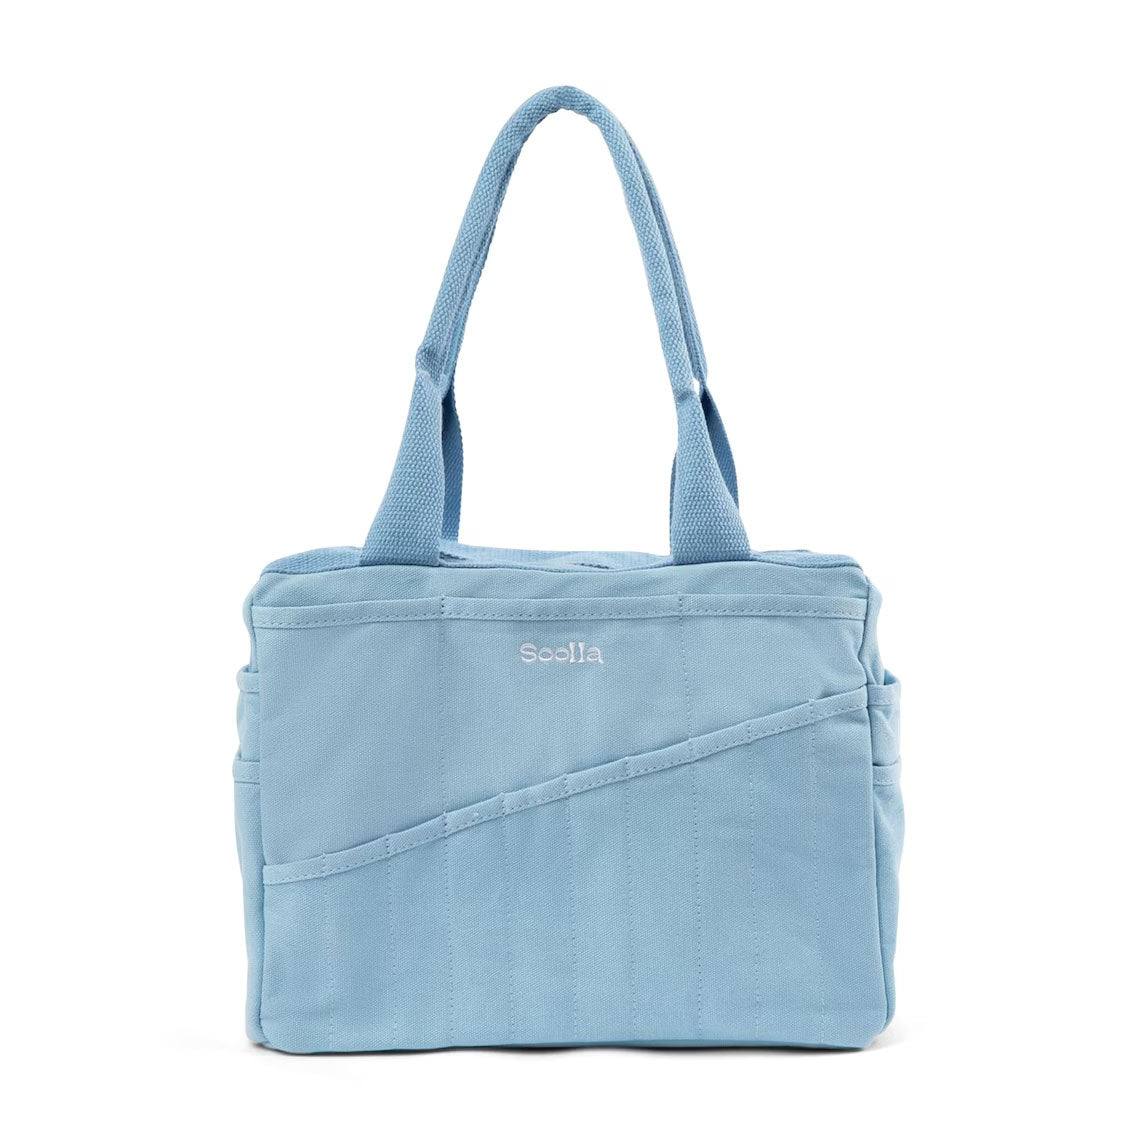 Soolla Studio Art Supply Bag - Blue Skies